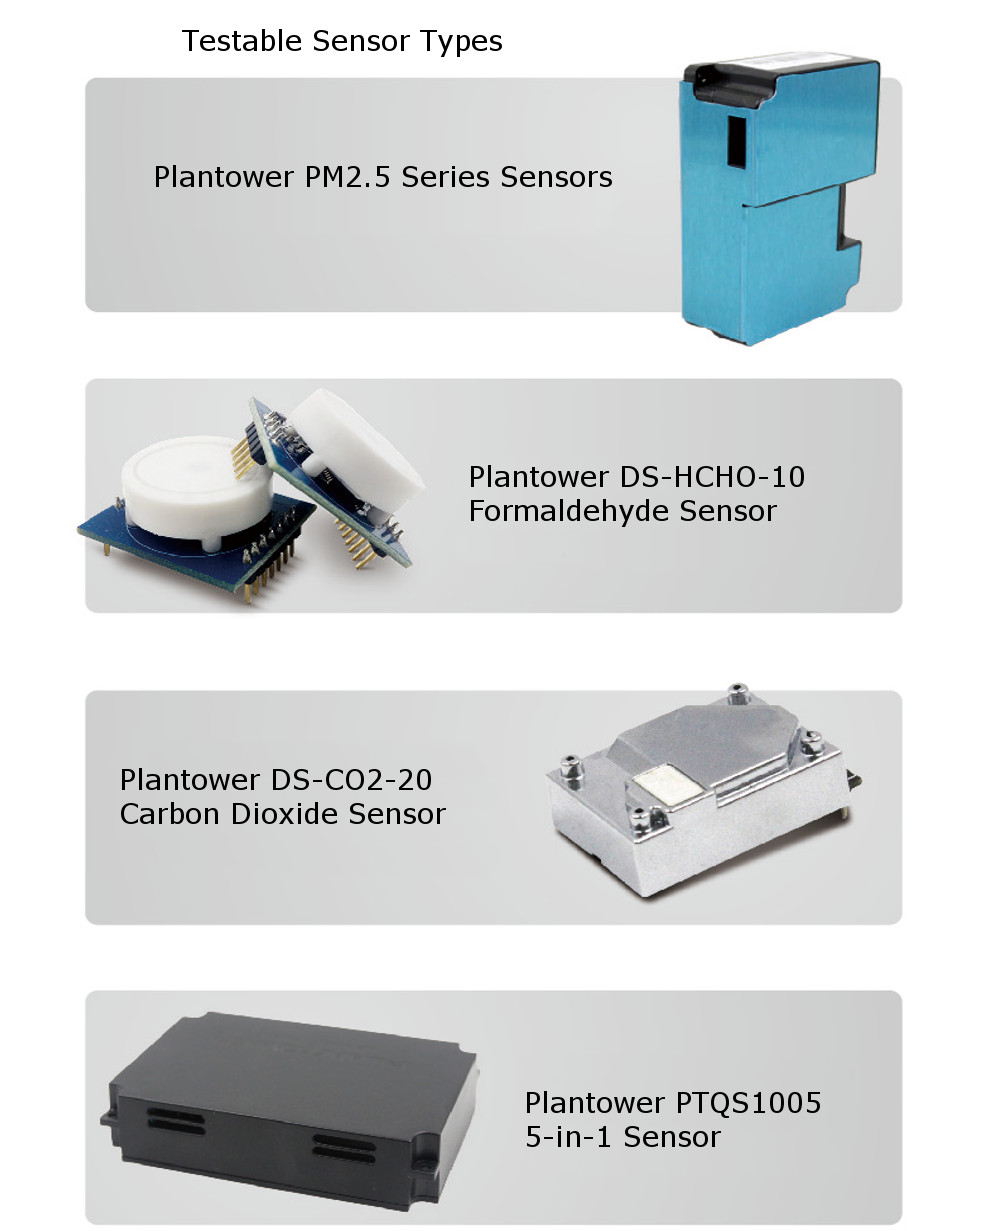 Plantowerreg-Sensor-Test-Board-Measure-PM25-Gas-Formaldehyde-Carbon-Dioxide-and-Other-Integrated-Sen-1582843